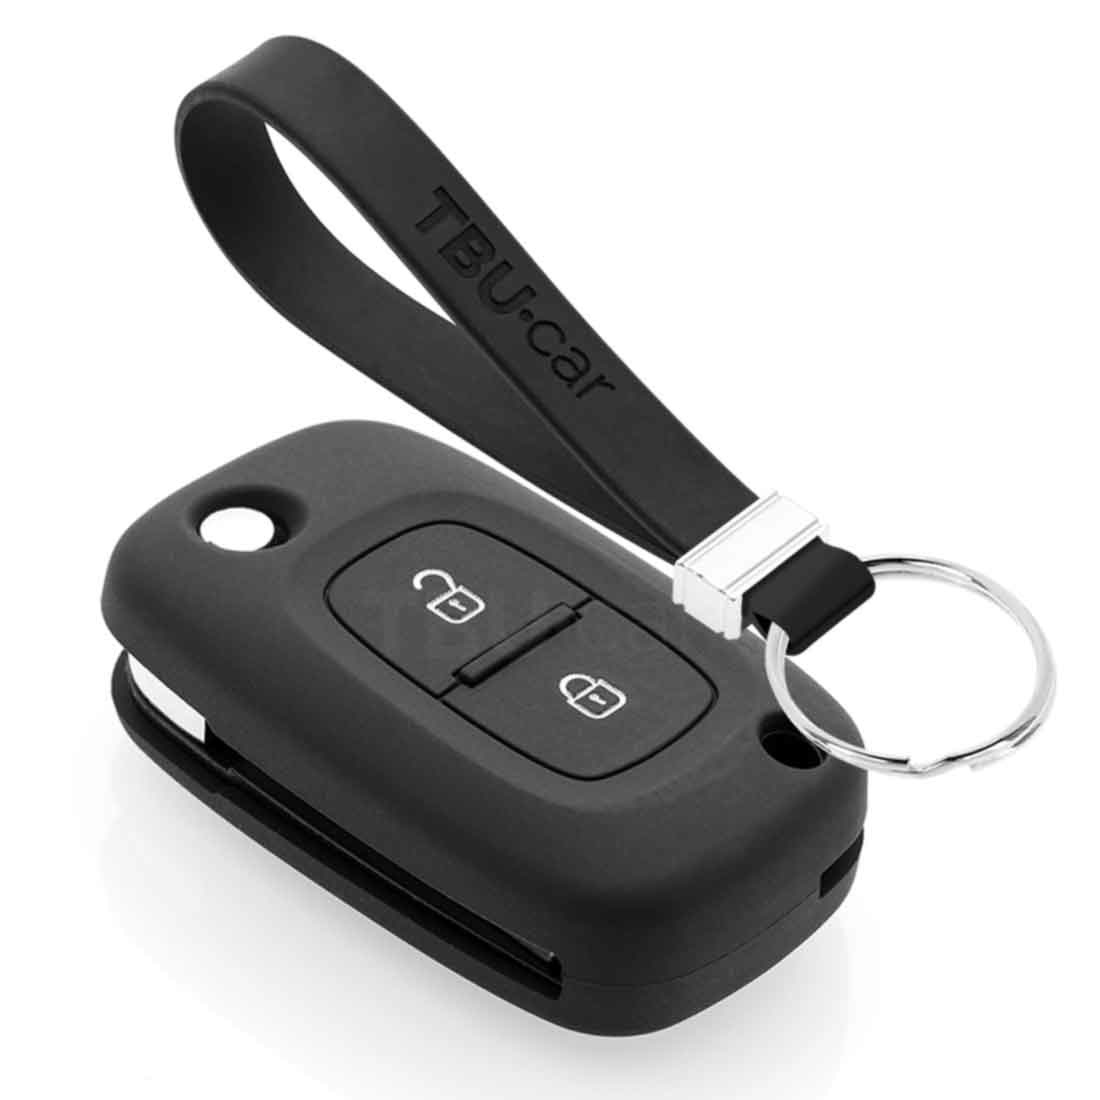 TBU car TBU car Autoschlüssel Hülle kompatibel mit Mercedes 2 Tasten - Schutzhülle aus Silikon - Auto Schlüsselhülle Cover in Schwarz